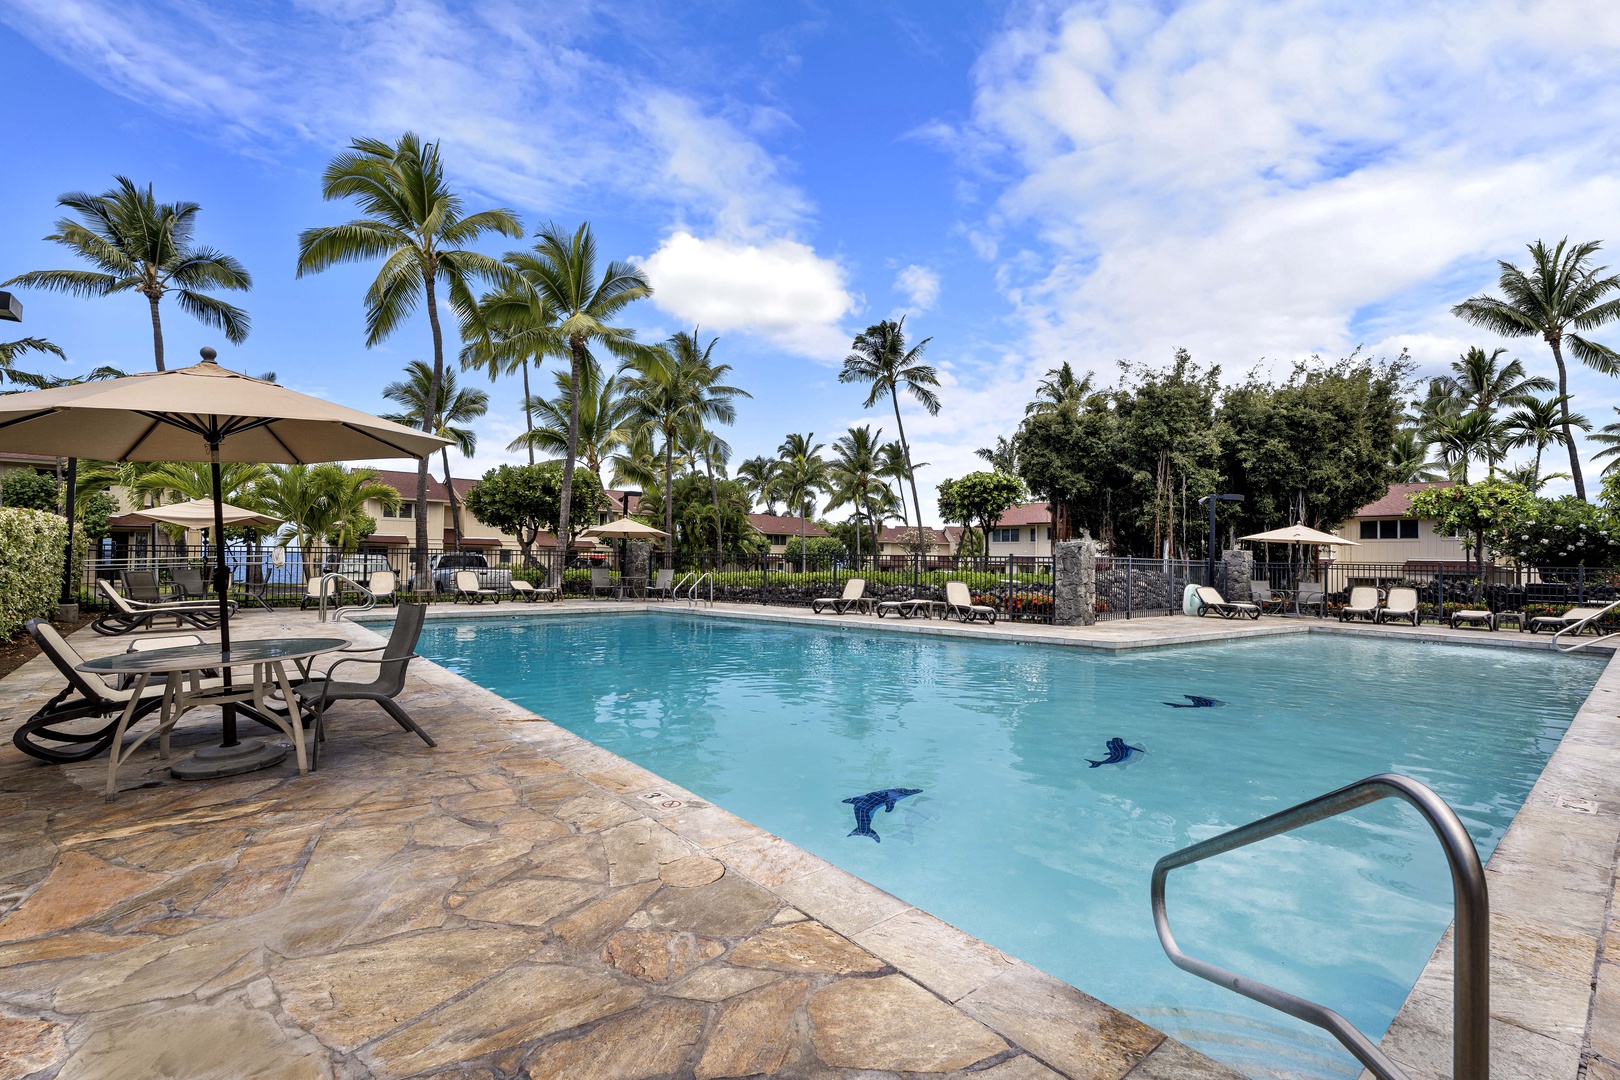 Kailua Kona Vacation Rentals, Keauhou Kona Surf & Racquet 2101 - Pool with poolside furniture for complete relaxation.